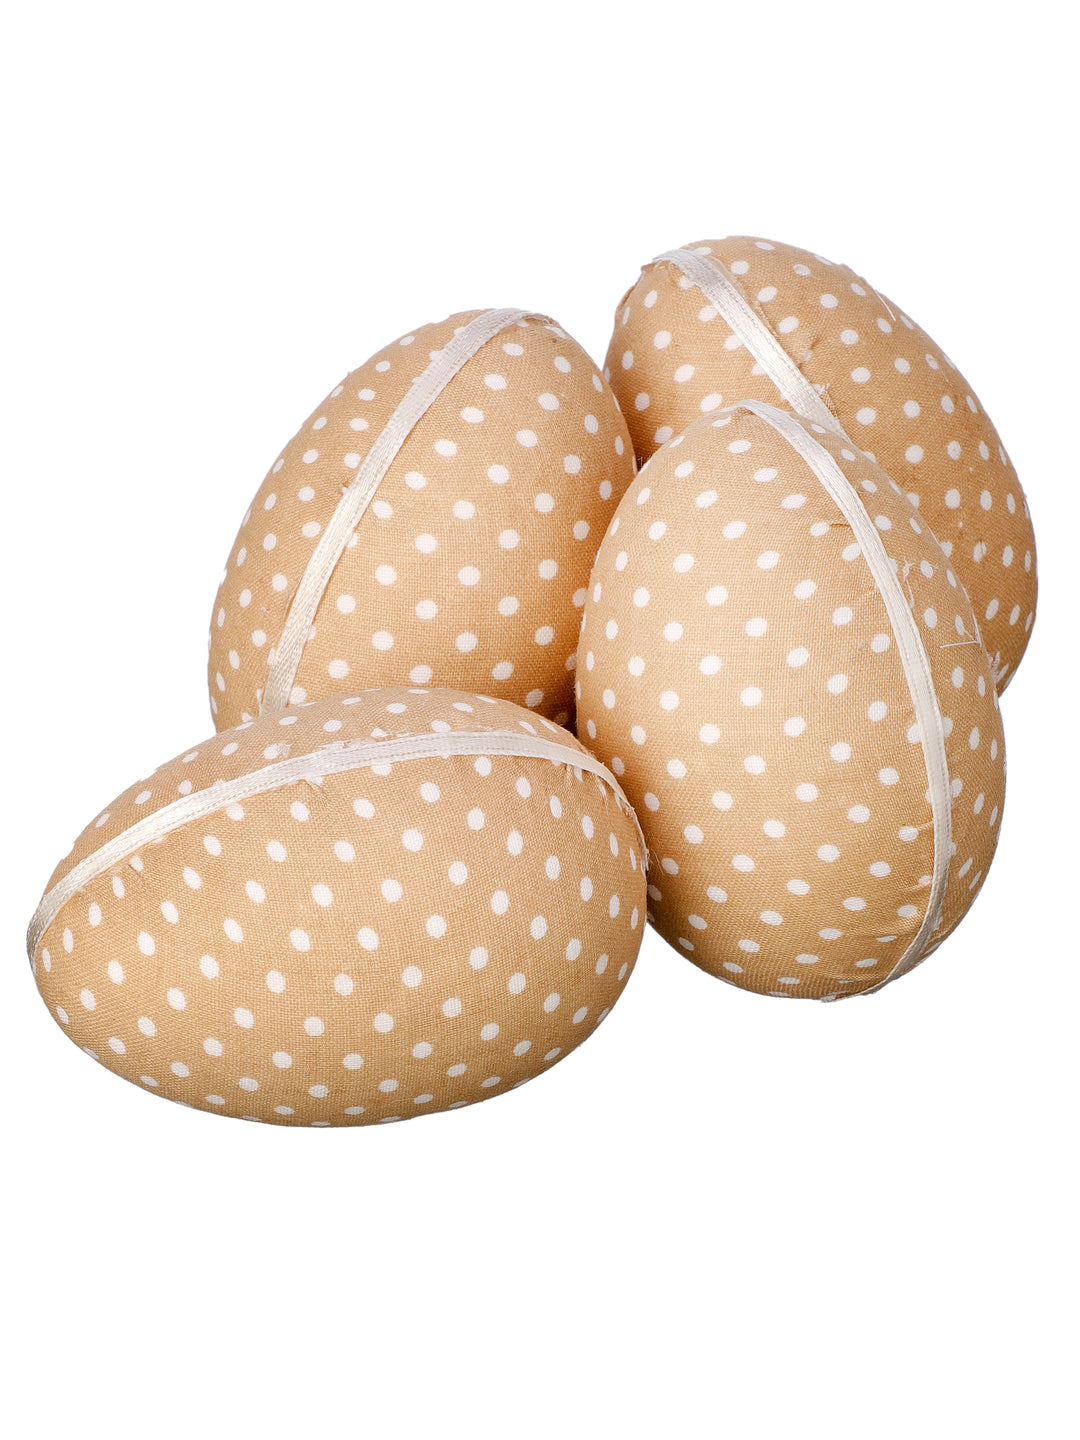 Regency 3" Polka Dot Eggs - Set of 4 in Taupe Grey